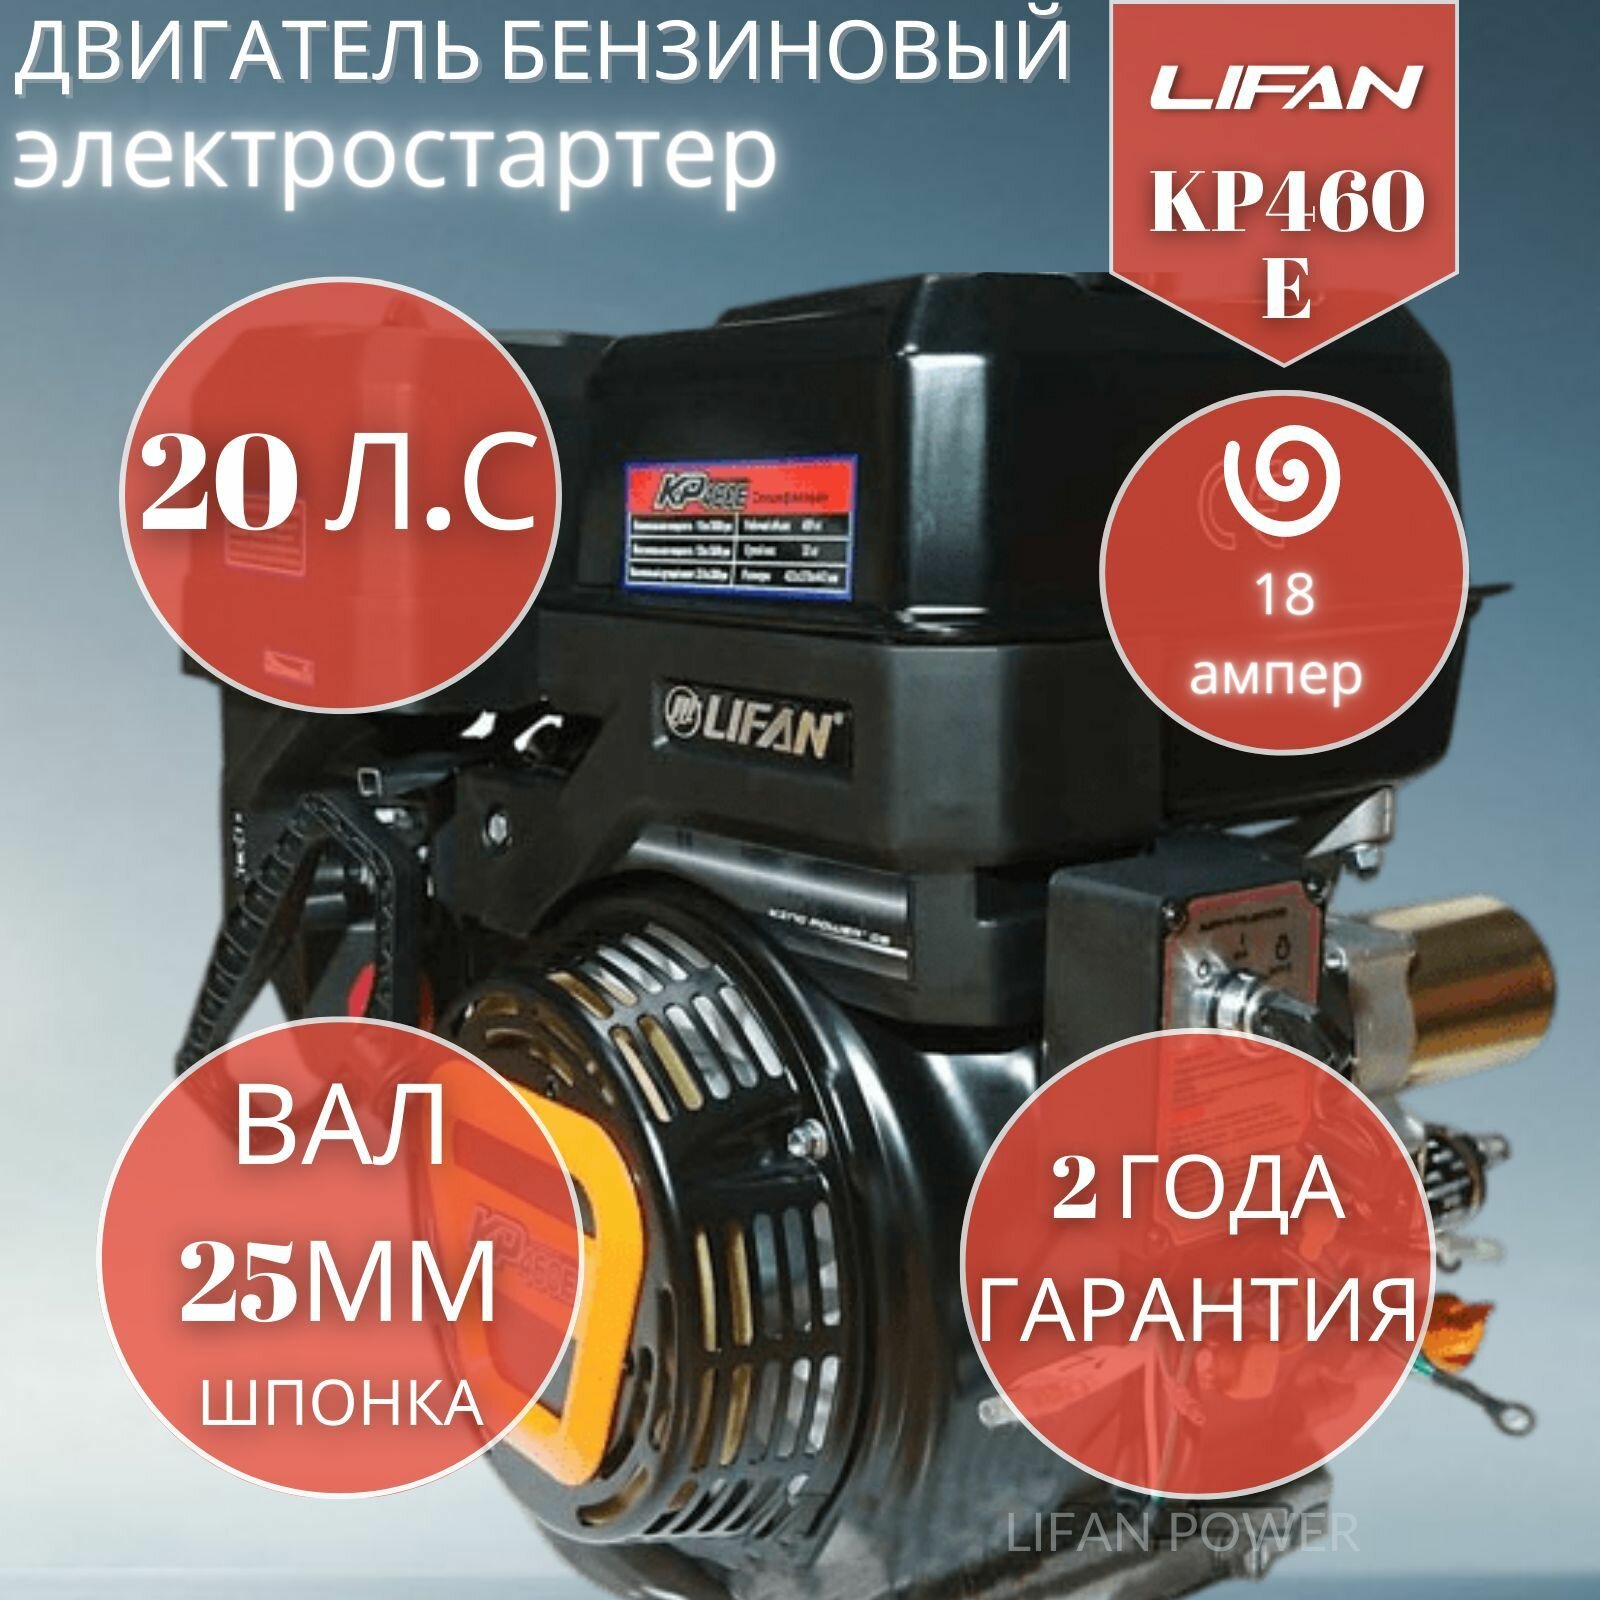 Бензиновый двигатель LIFAN KP460E (192FD-2T) 18A 20 л.с.